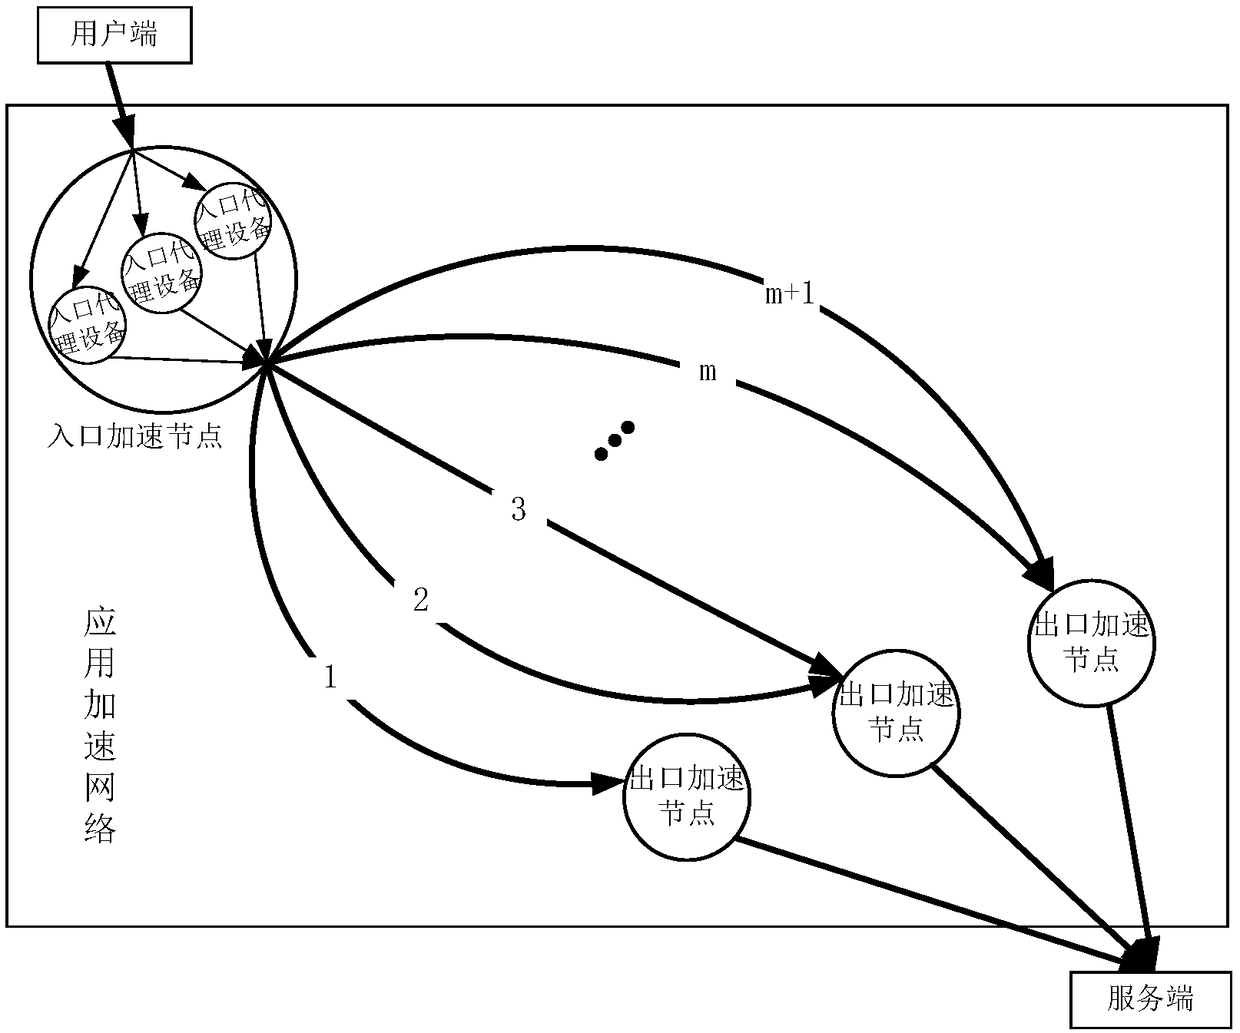 Method and apparatus for transmitting data traffic